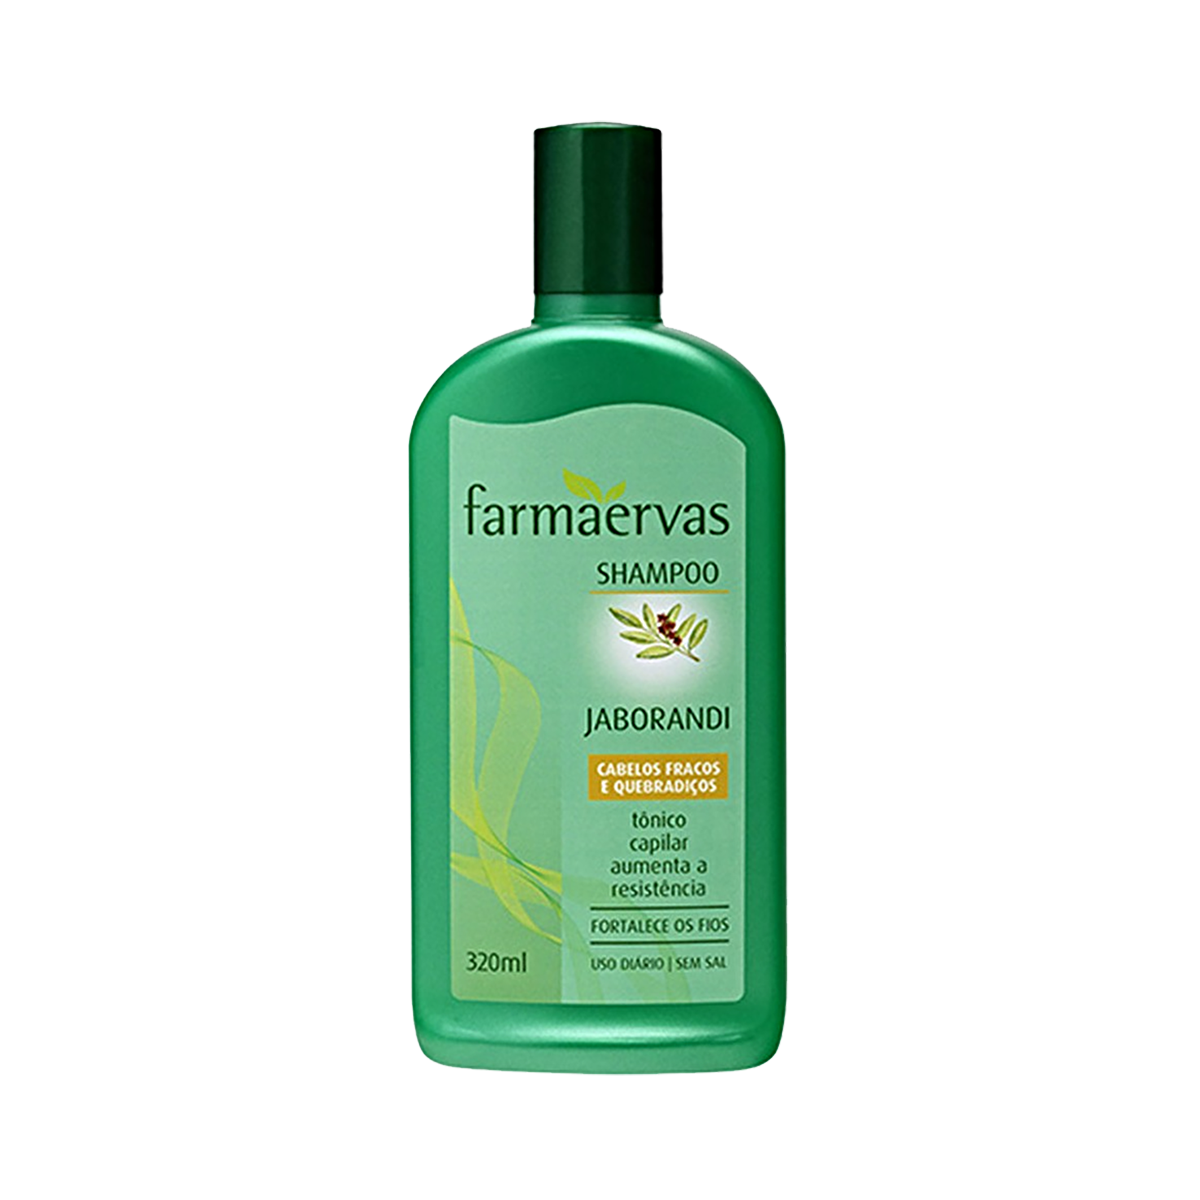 Shampoo Farmaervas Antiqueda 320ml